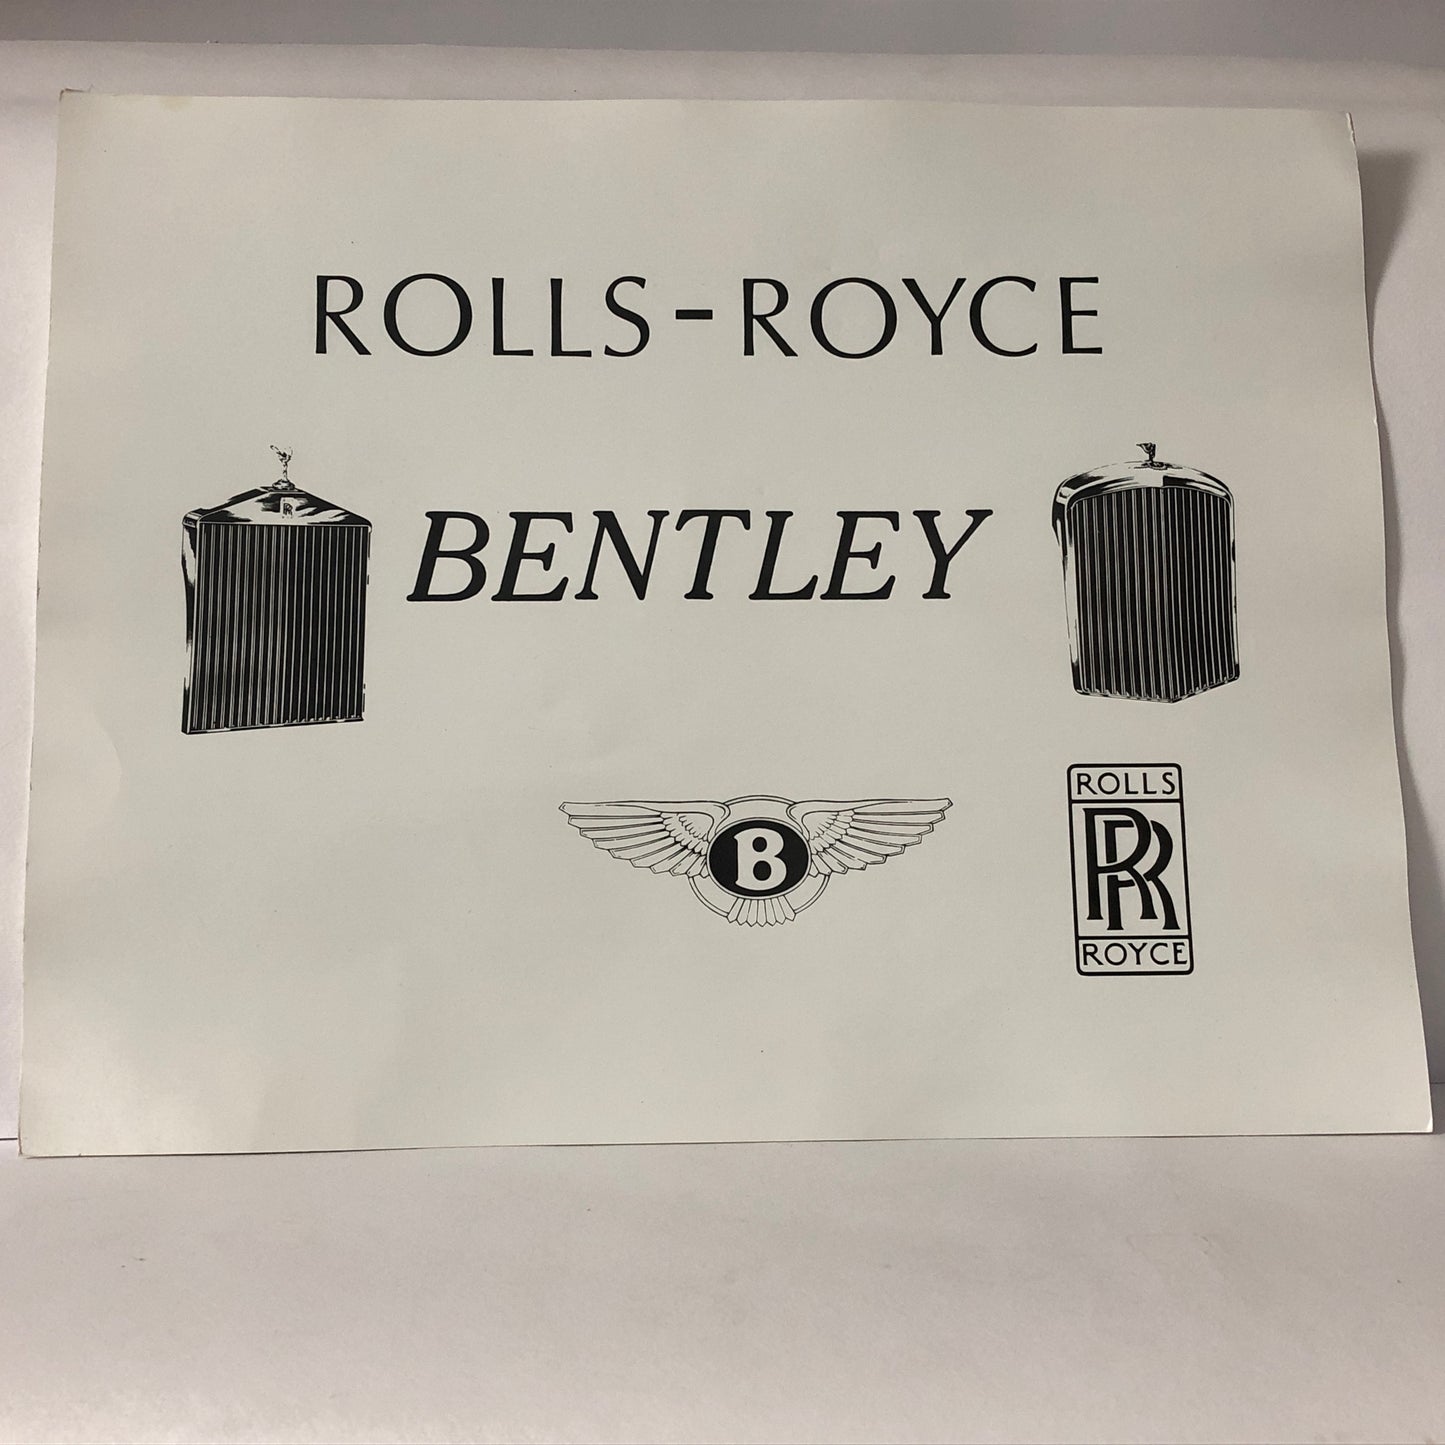 Rolls-Royce e Bentley, Stampa per Marketing, con Logo, Stemma e Radiatore Rolls-Royce e Bentley - Raggi's Collectibles' Automotive Art